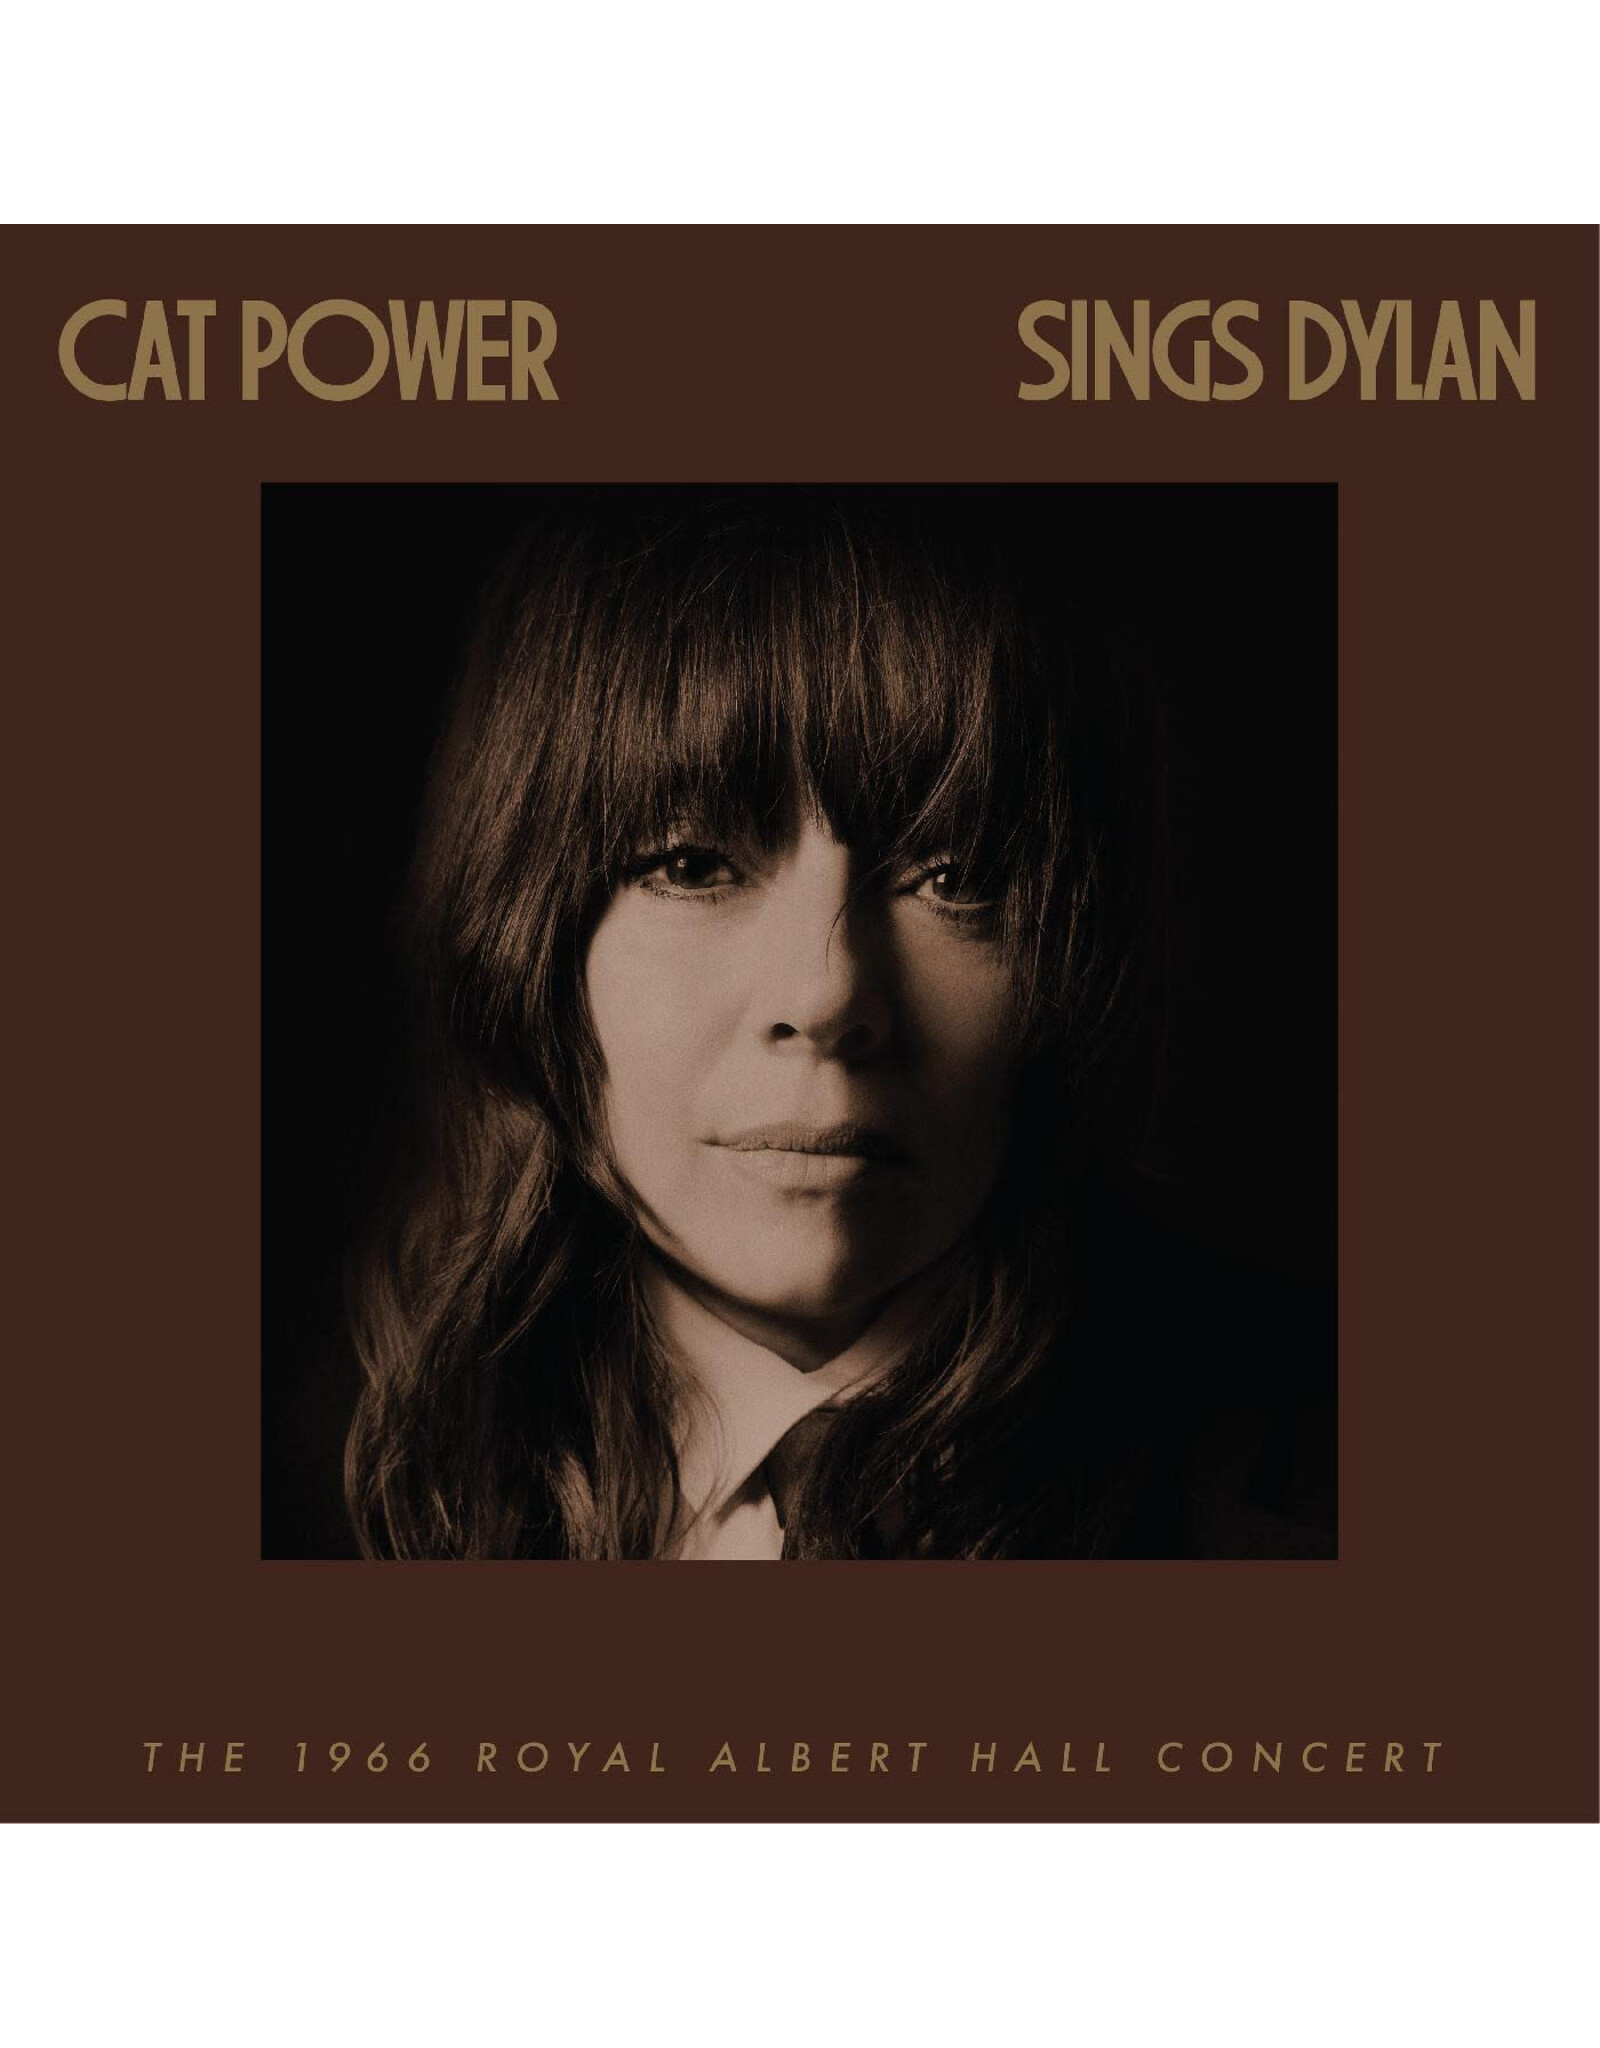 Domino Cat Power: Cat Power Sings Dylan: The 1966 Royal Albert Hall Concert LP